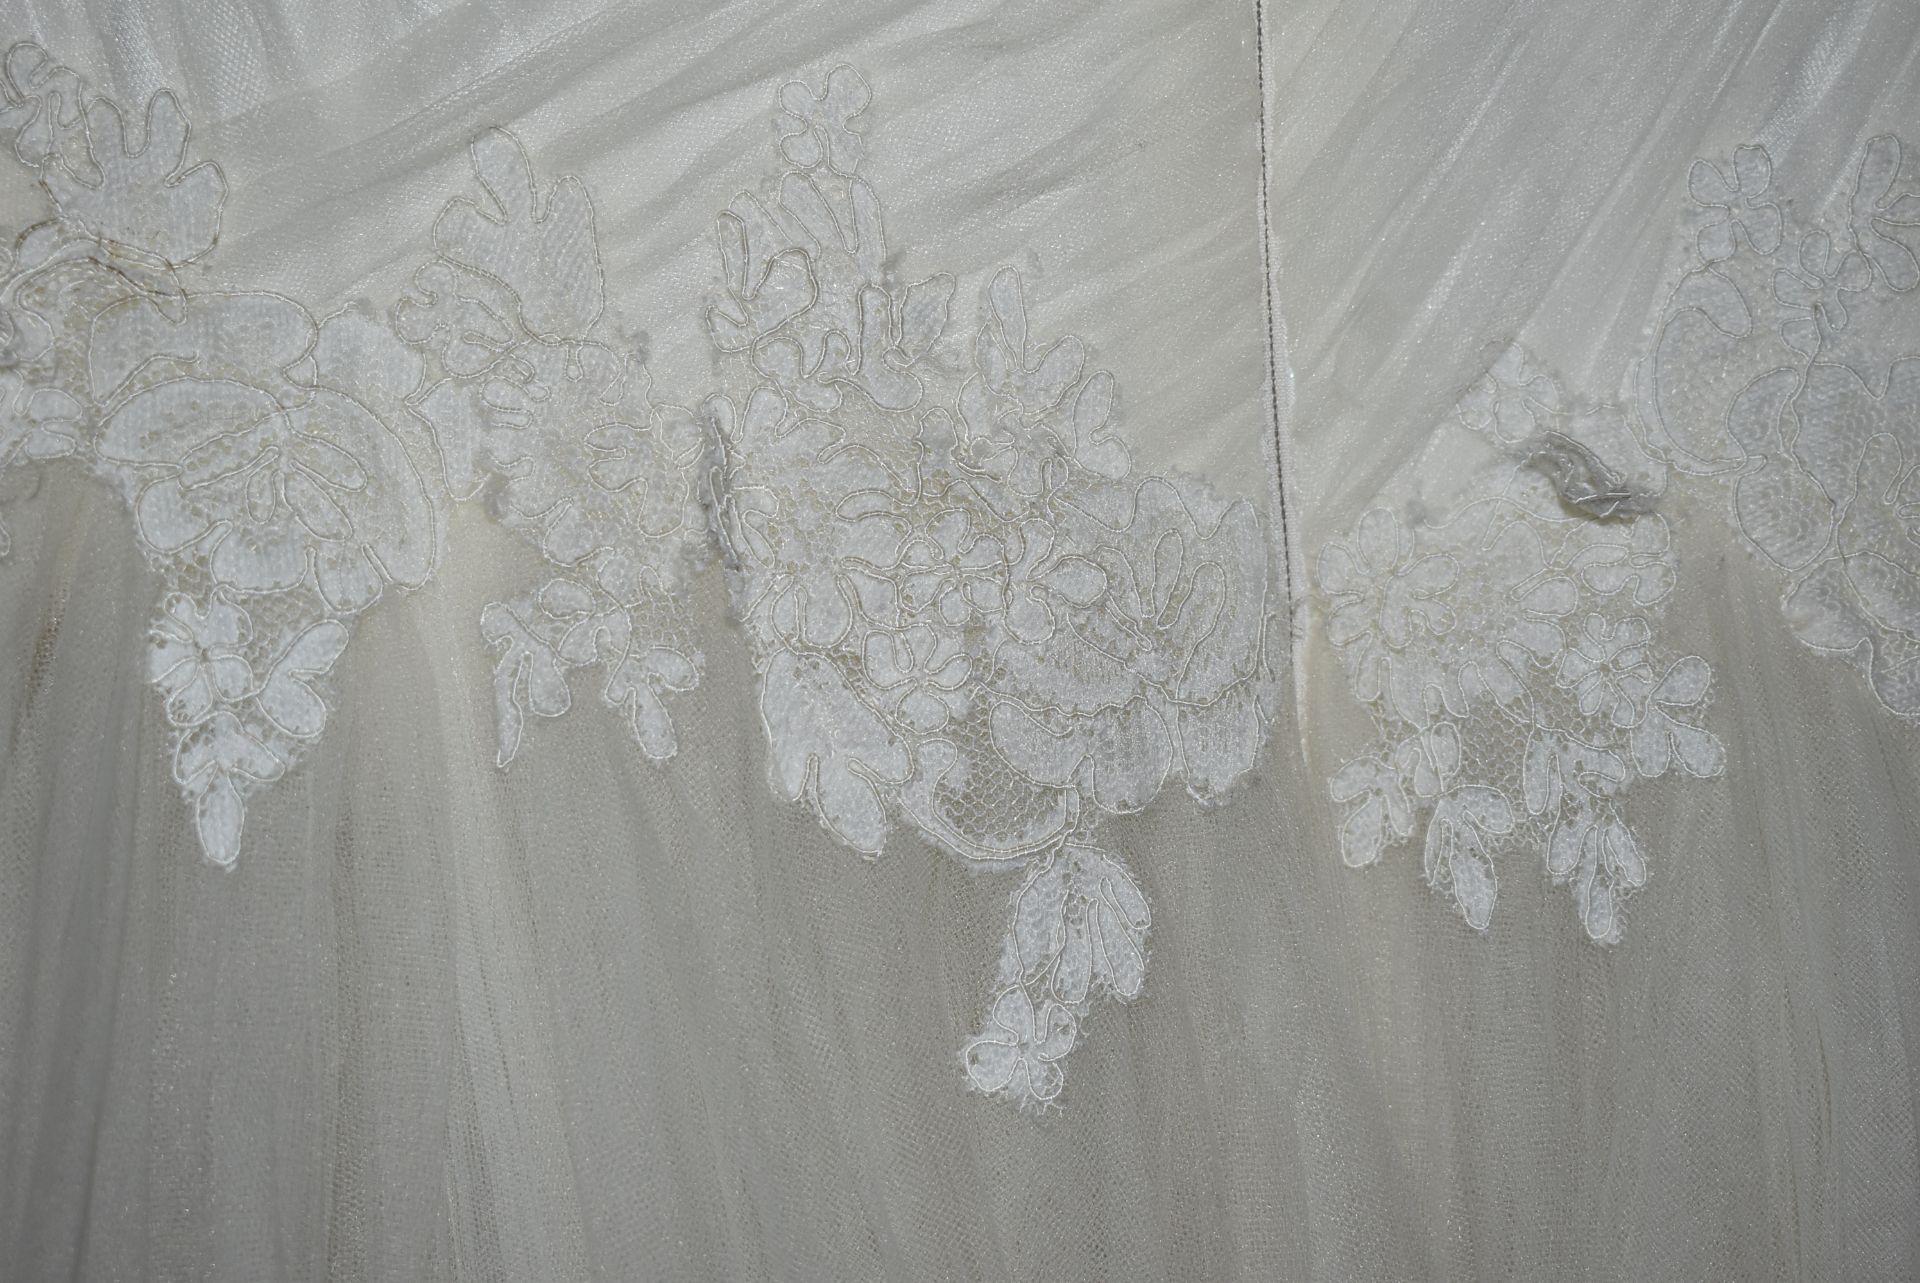 1 x LUSAN MANDONGUS Strapless Chiffon And Lace Designer Wedding Dress Bridal Gown RRP £2,600 UK 12 - Image 5 of 6